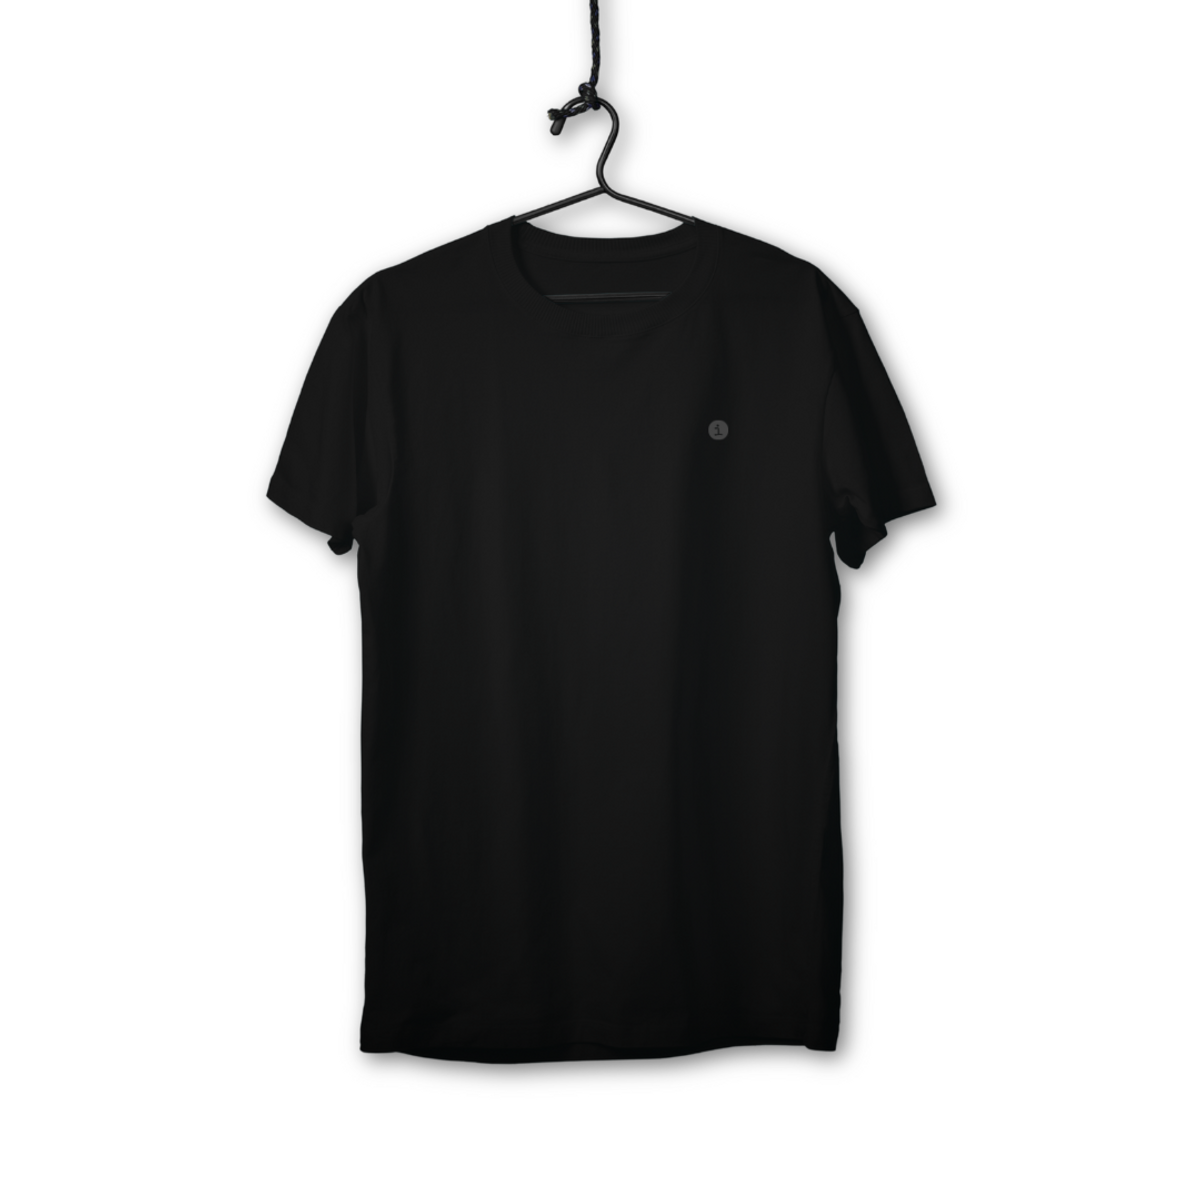 Nome do produto: Camiseta Inspire i - Classic (kw)